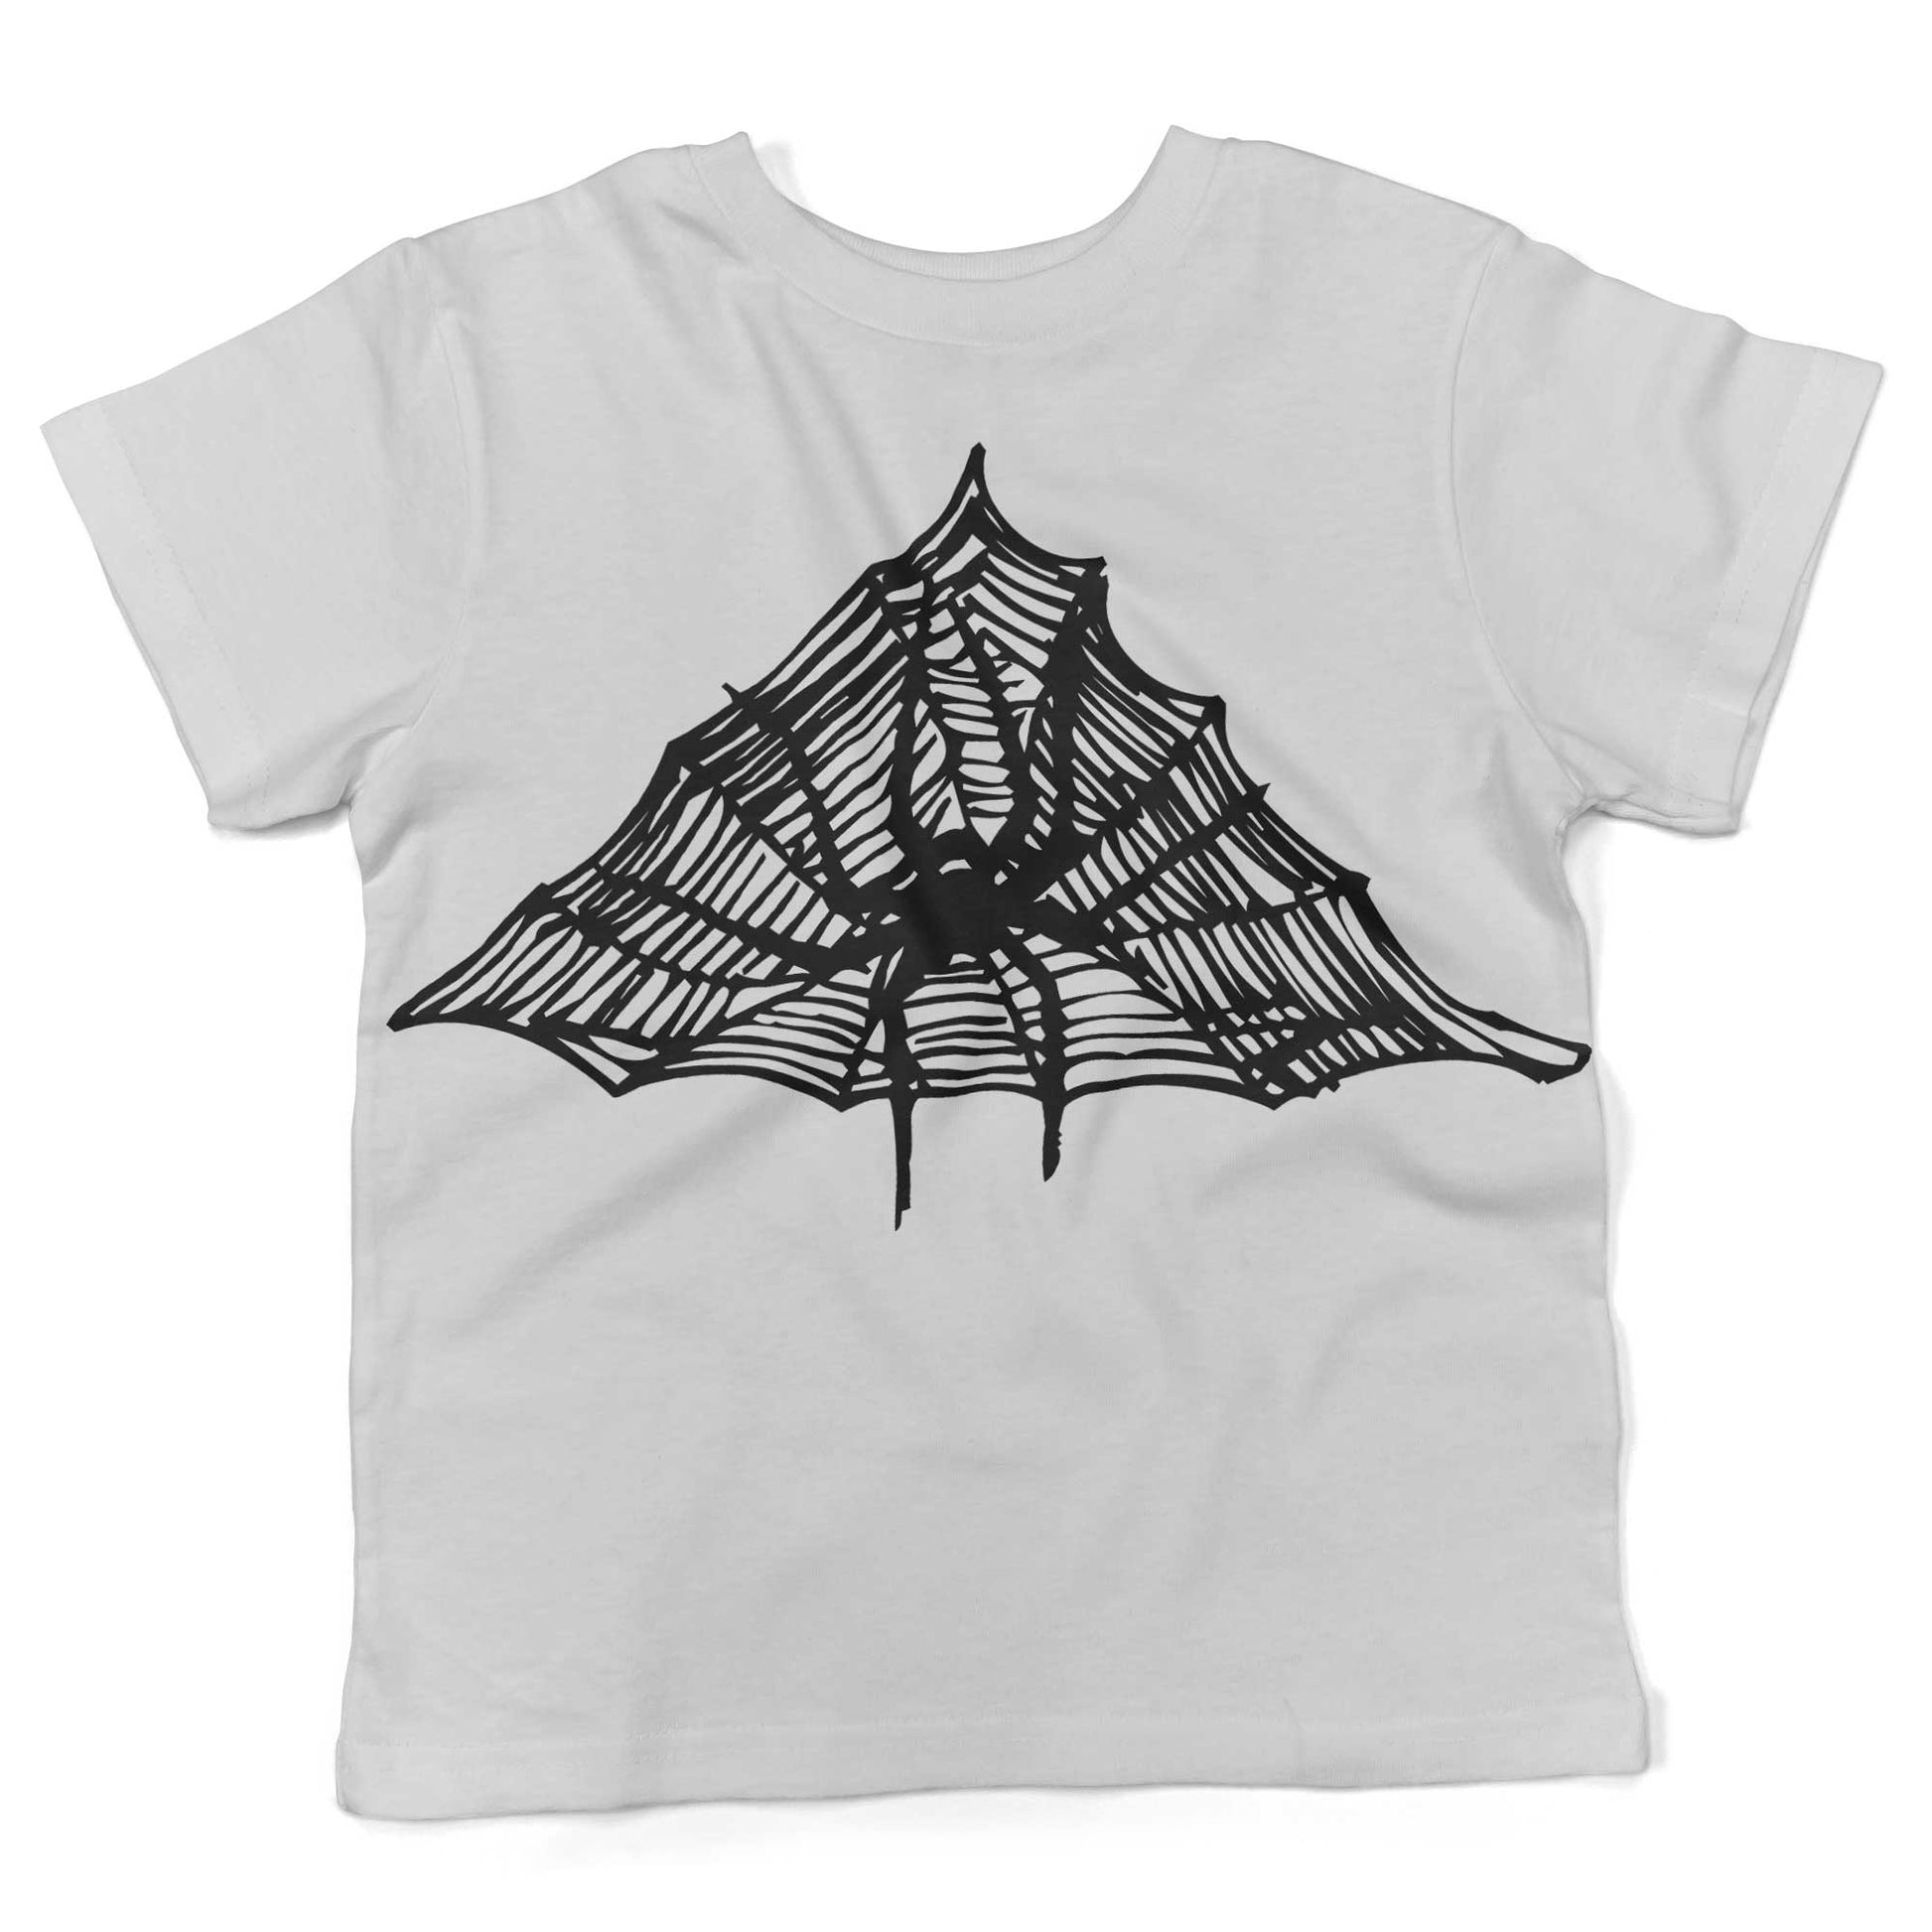 Spiderweb Toddler Shirt-White-2T